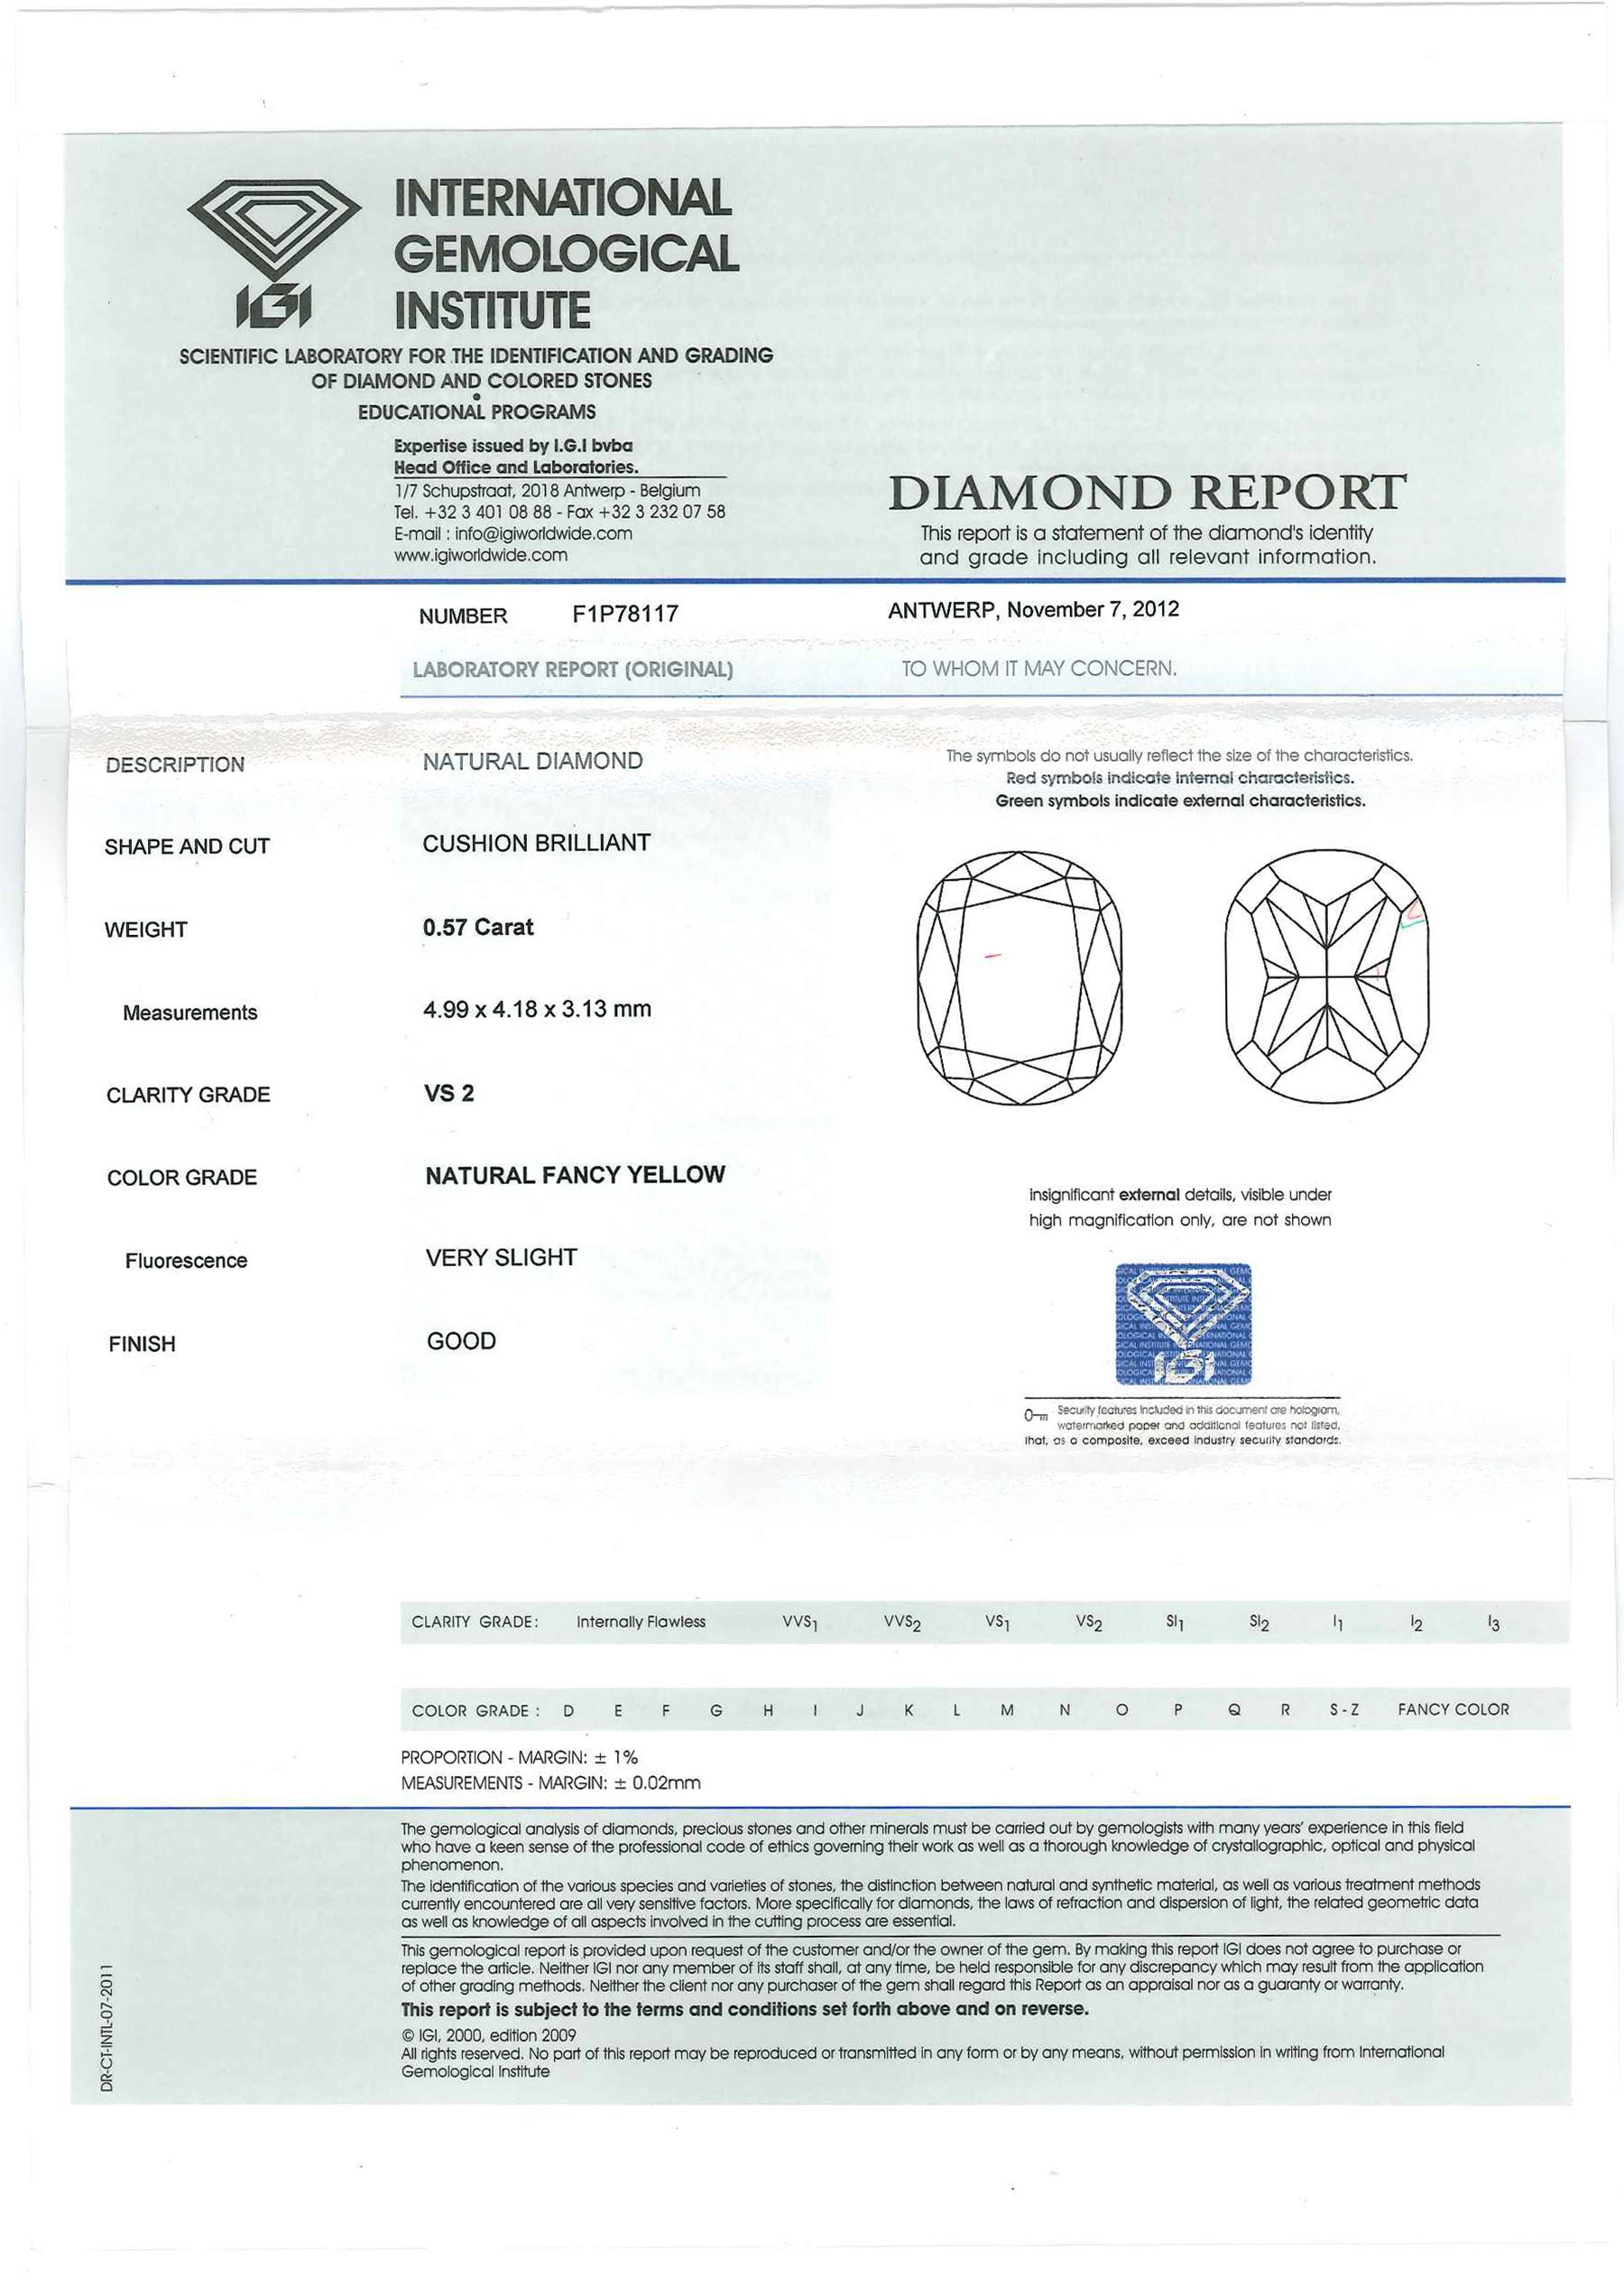 Certified loose fancy coloured cushion brilliant cut diamond - Image 2 of 5